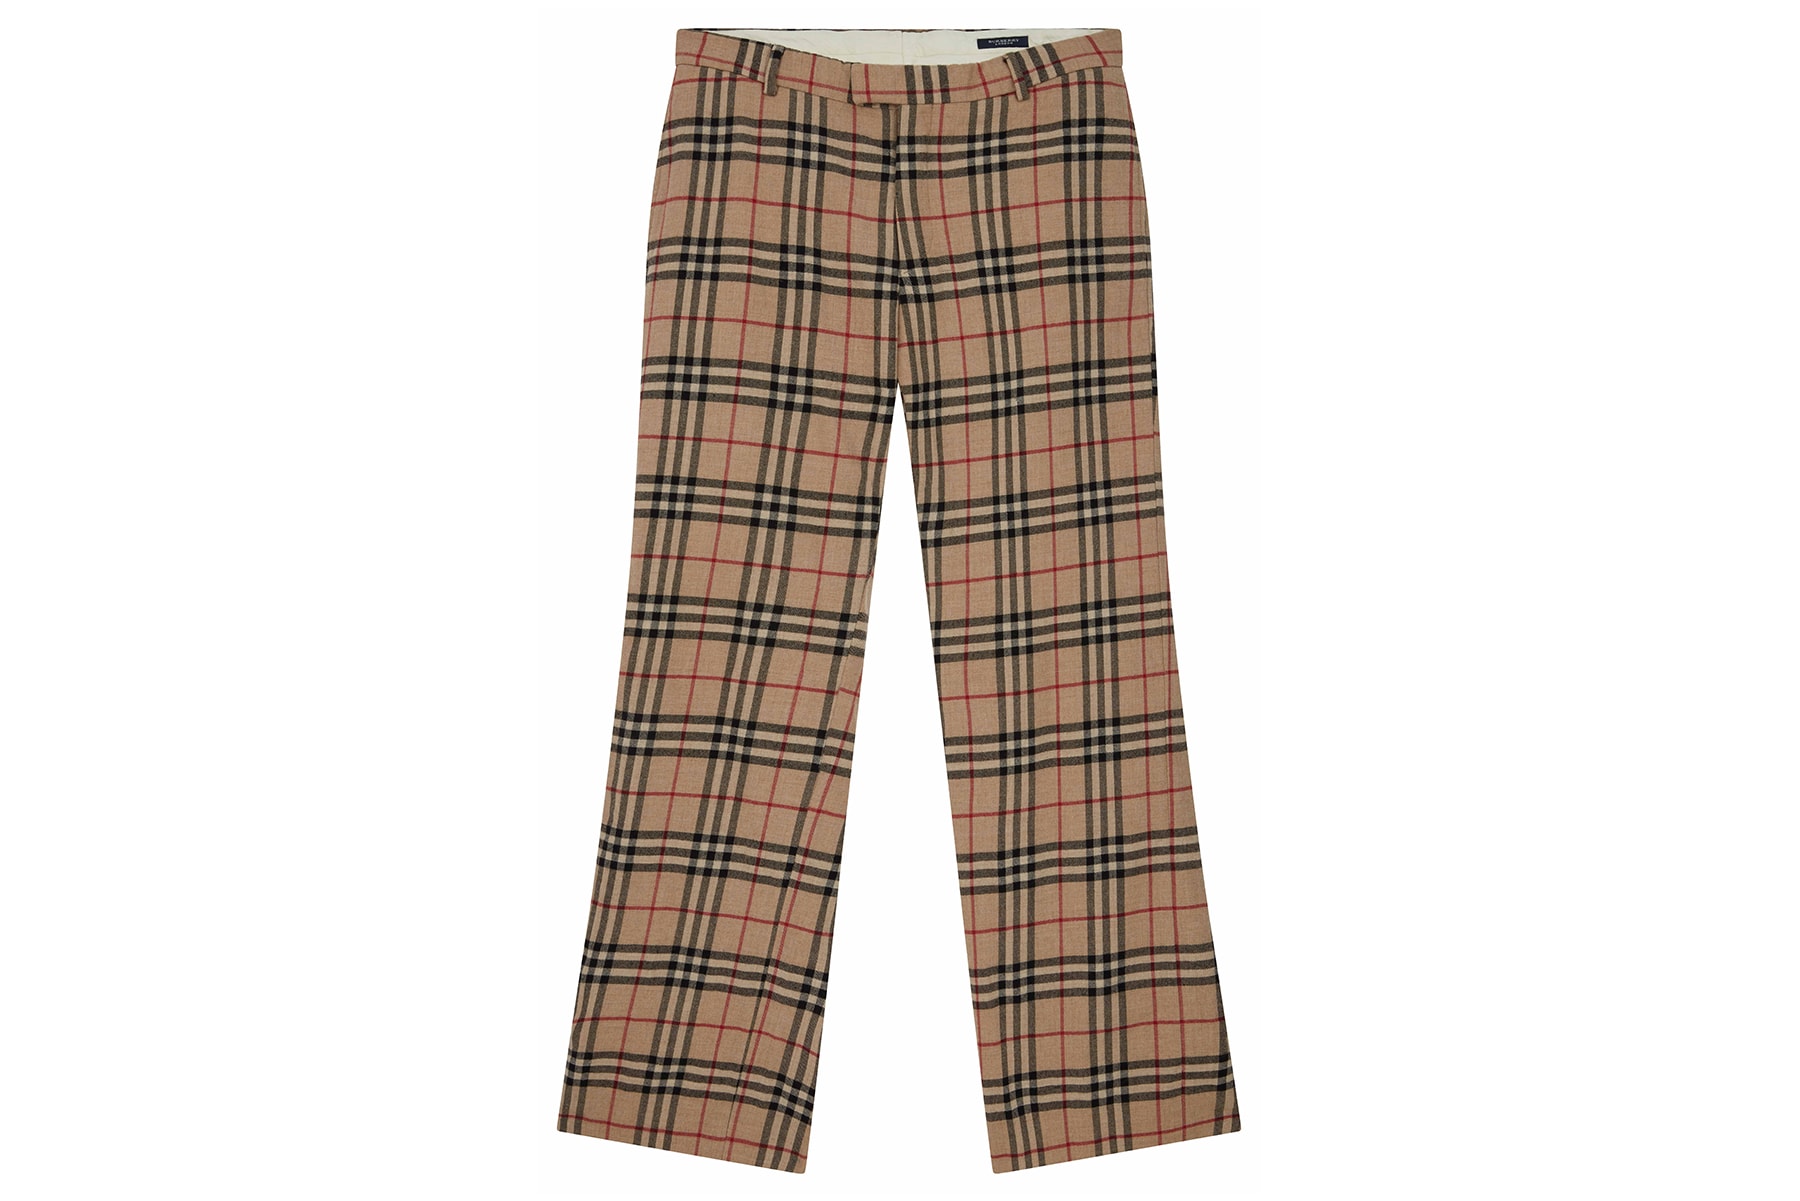 Burberry Vintage Nova Check Pants Asos marketplace price release